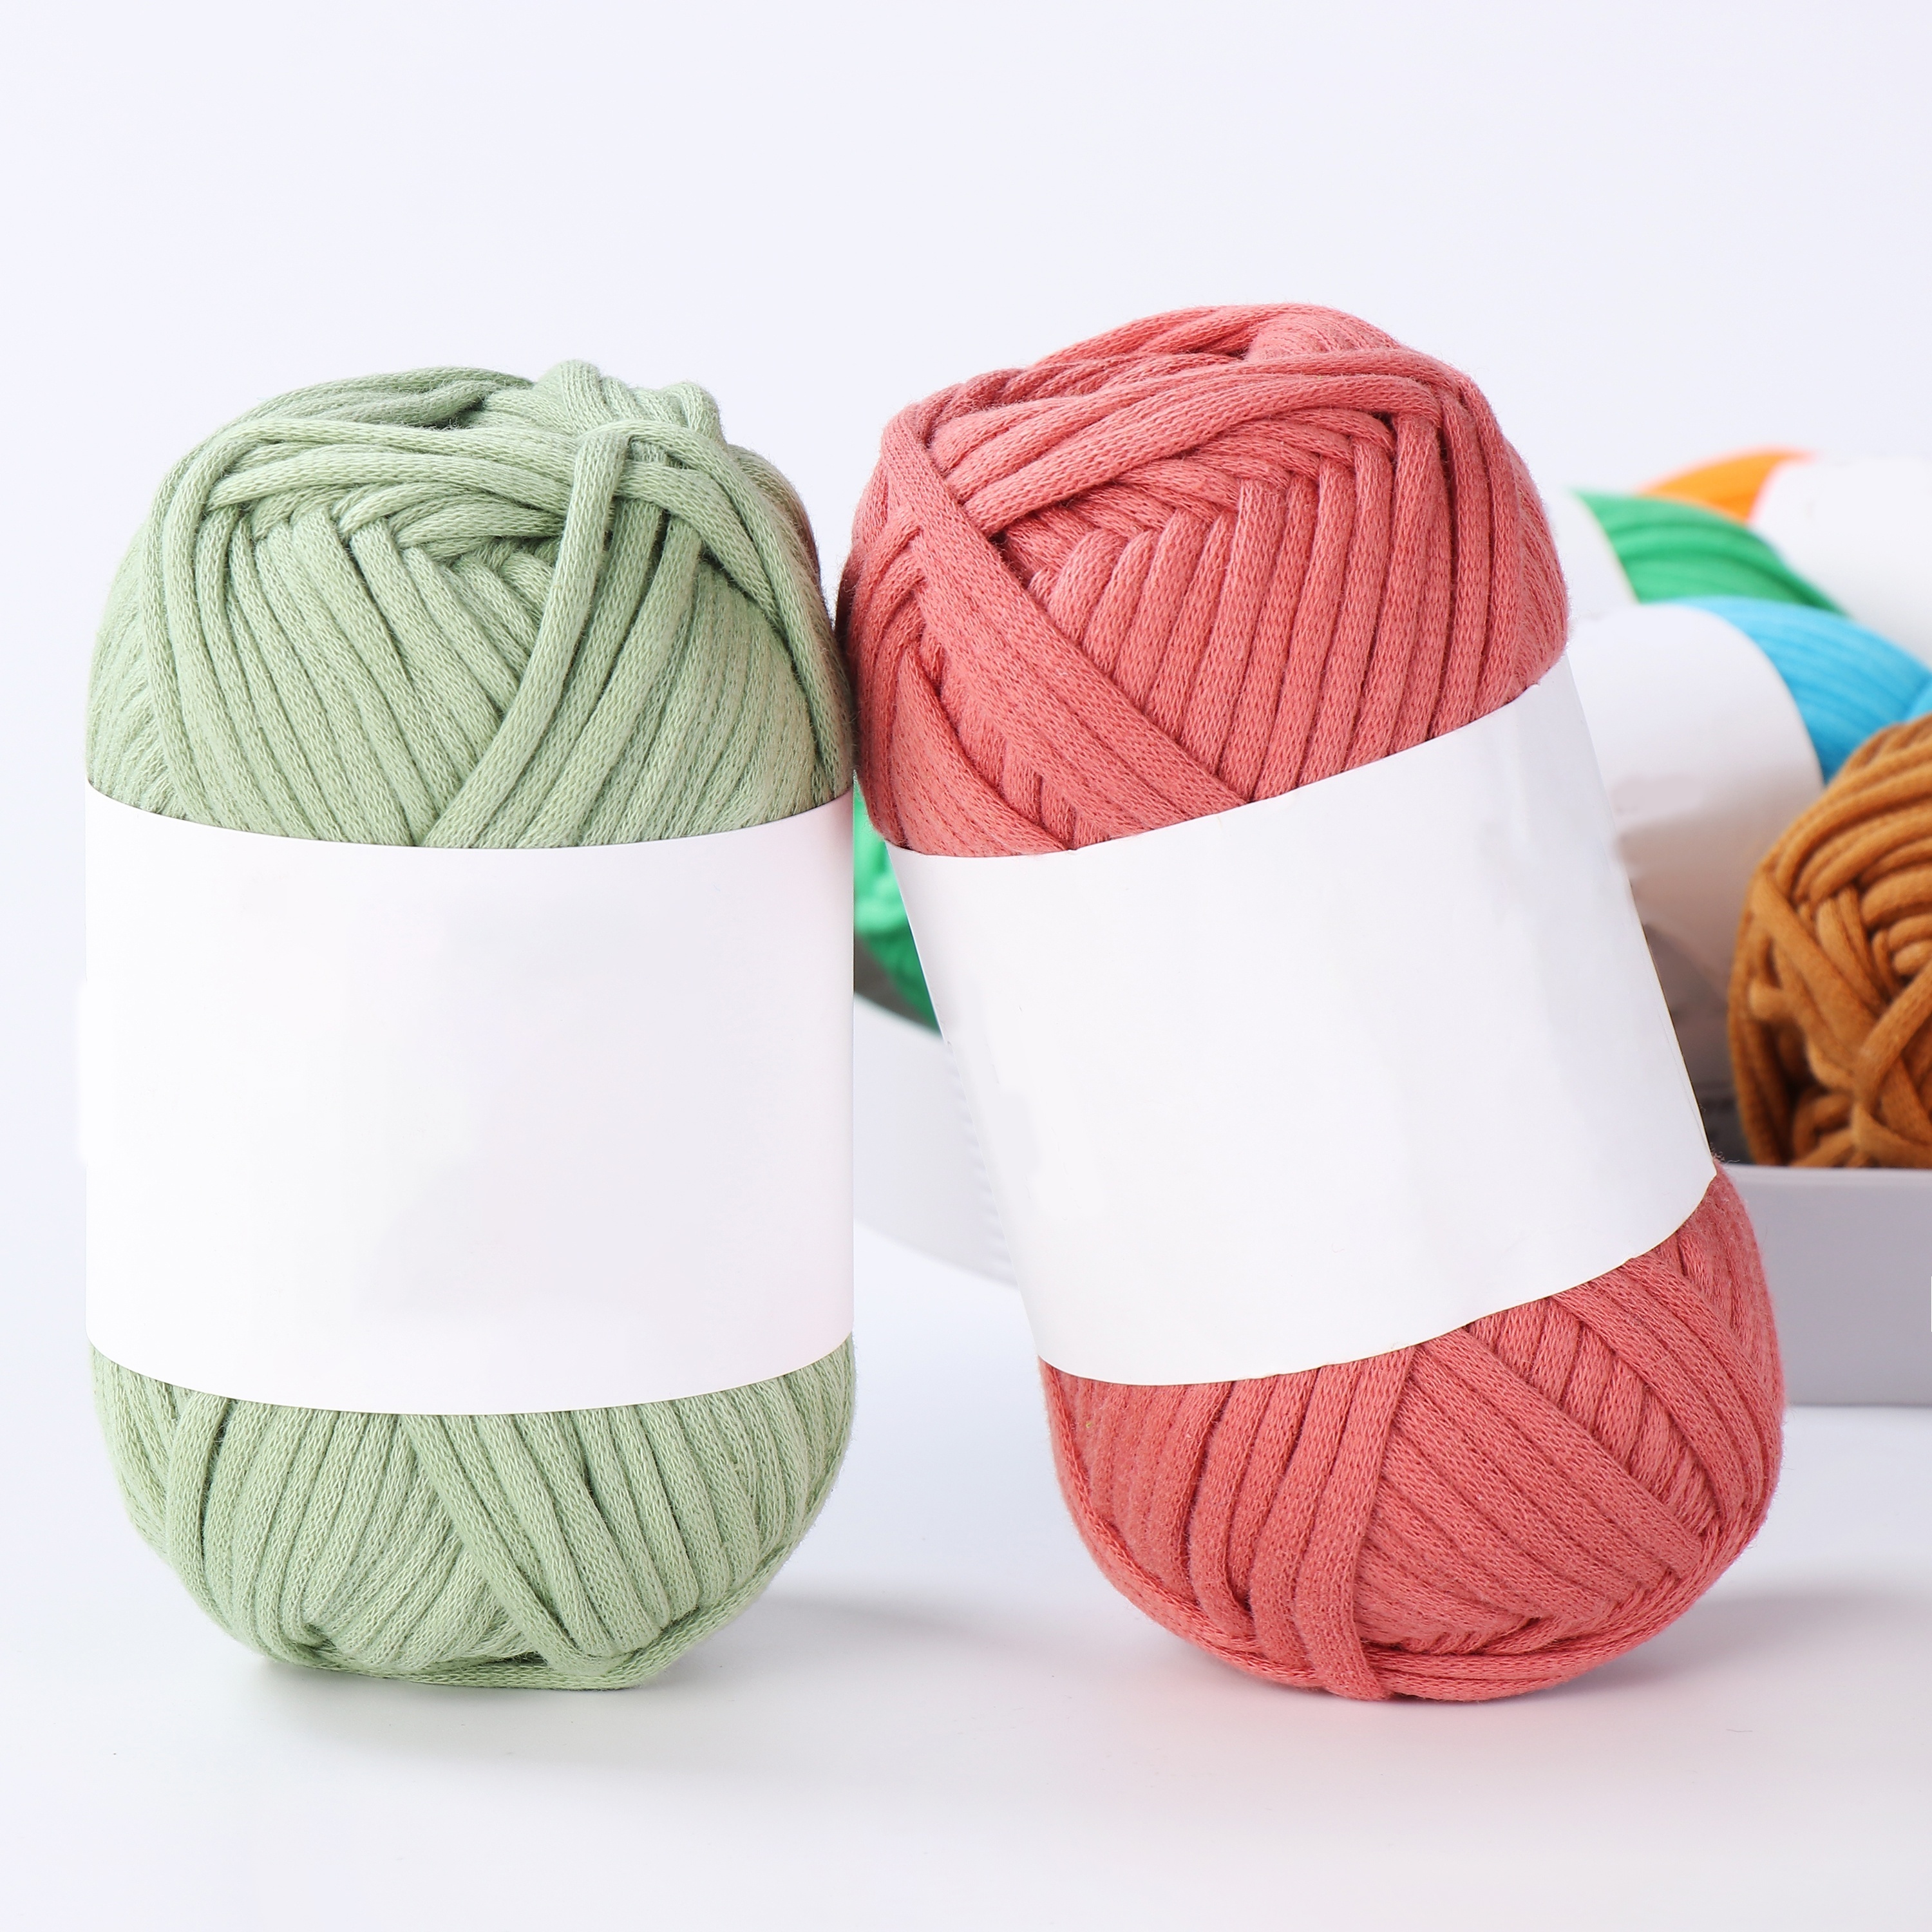 3 Rolls Cotton Rope Knitting Yarn Rainbow Yarn for Crocheting